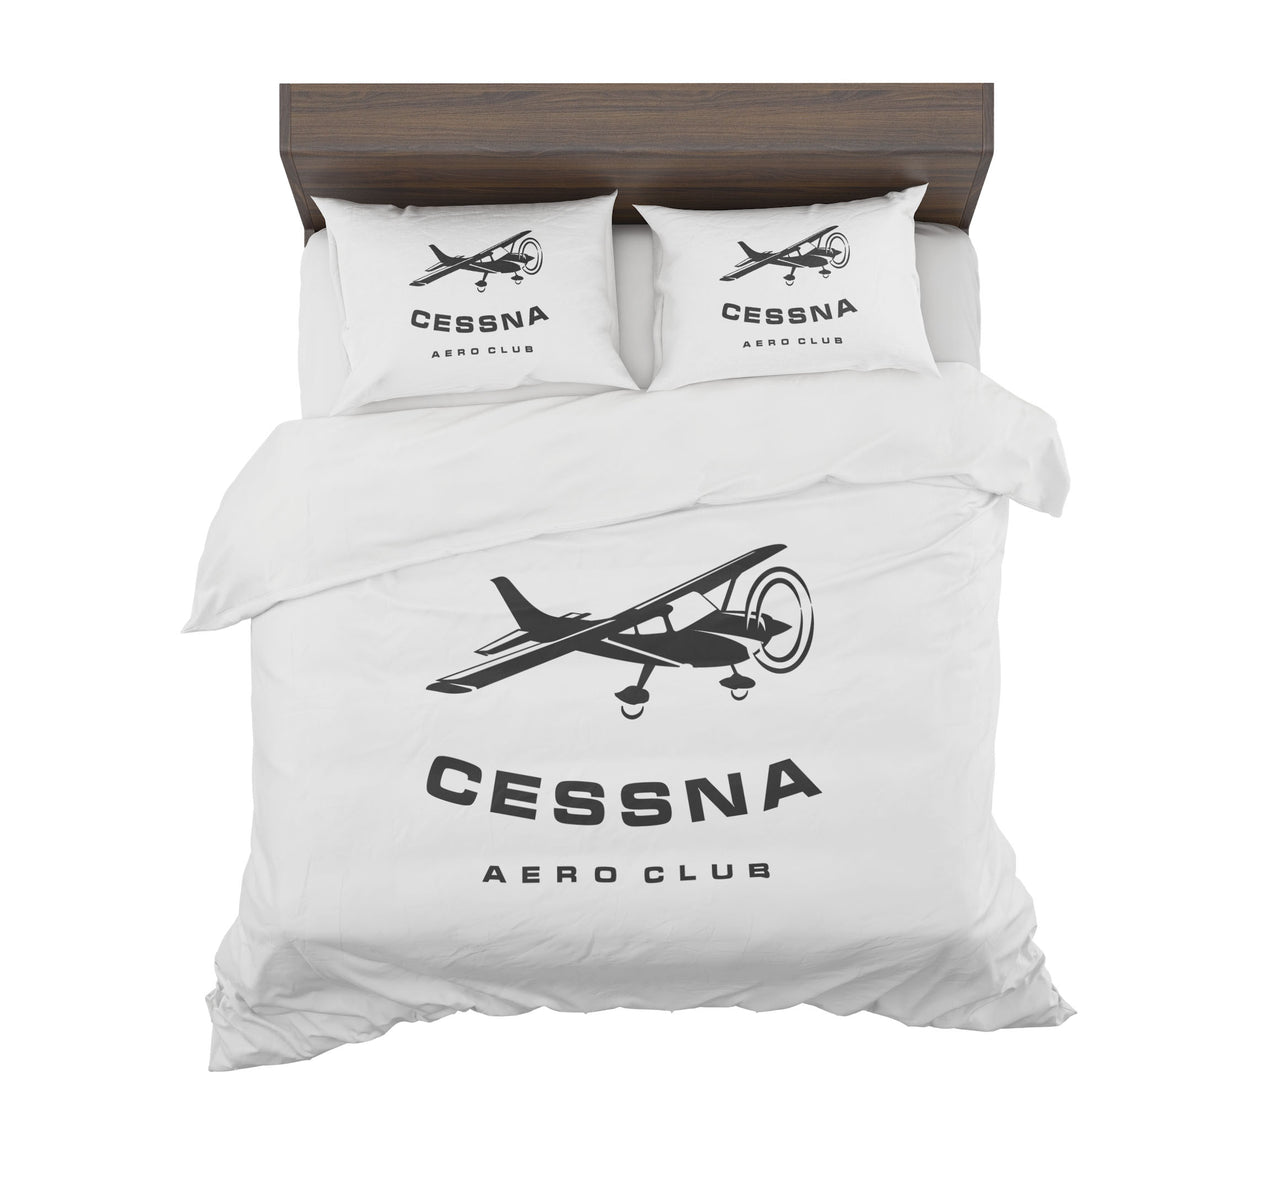 Cessna Aeroclub Designed Bedding Sets